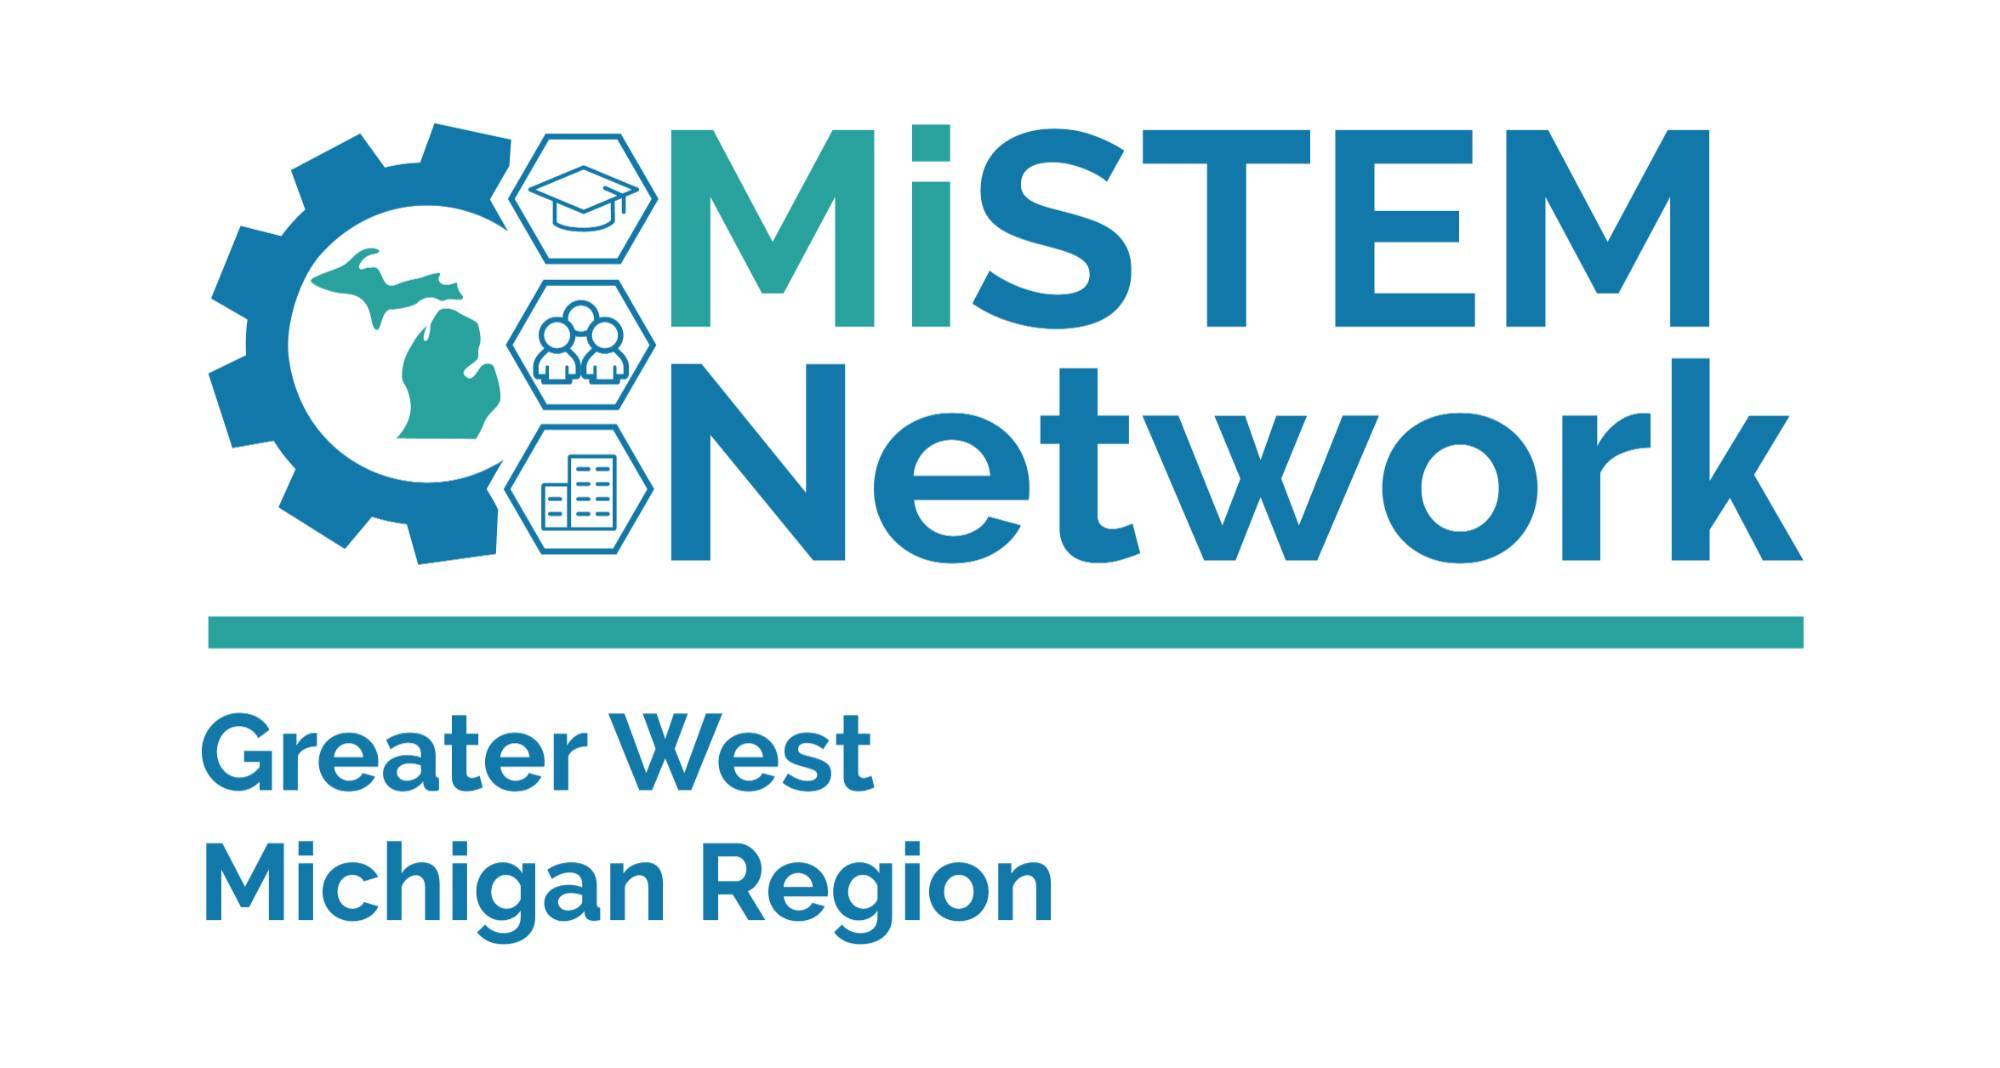 MiSTEM Network Greater West Michigan